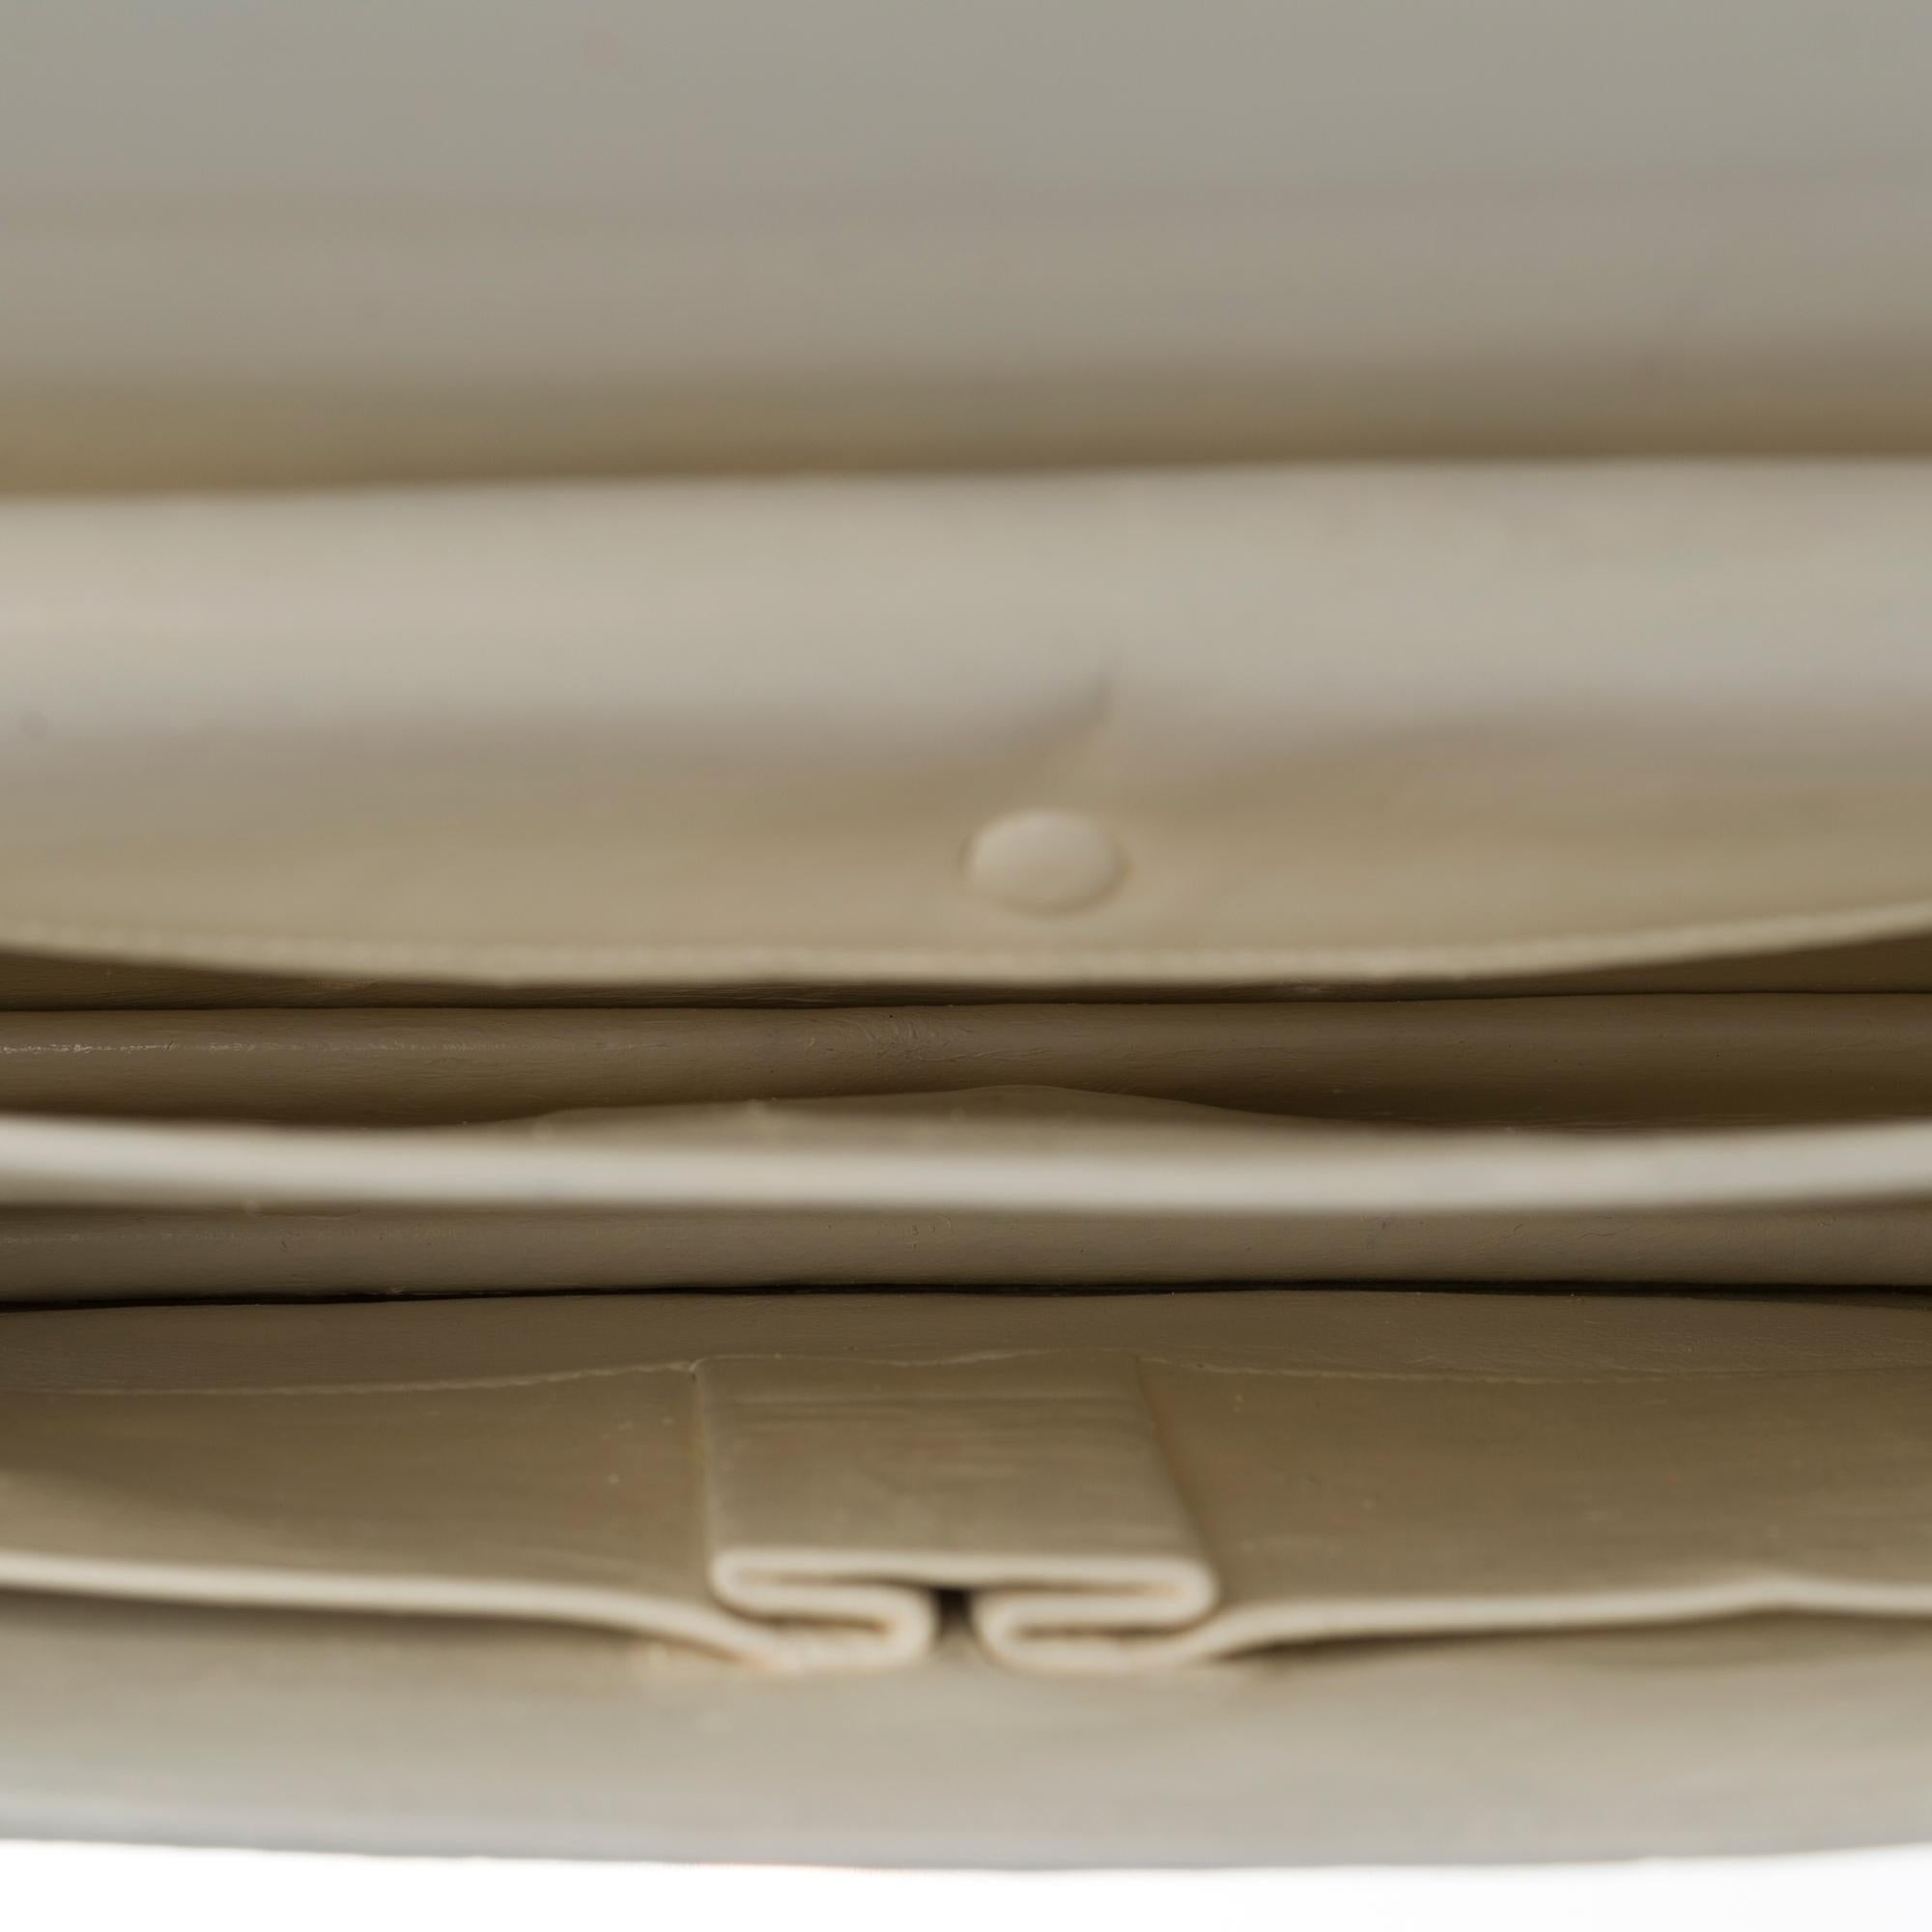 Beige VERY RARE Hermes vintage shoulder bag in white Beluga leather and gold hardware!